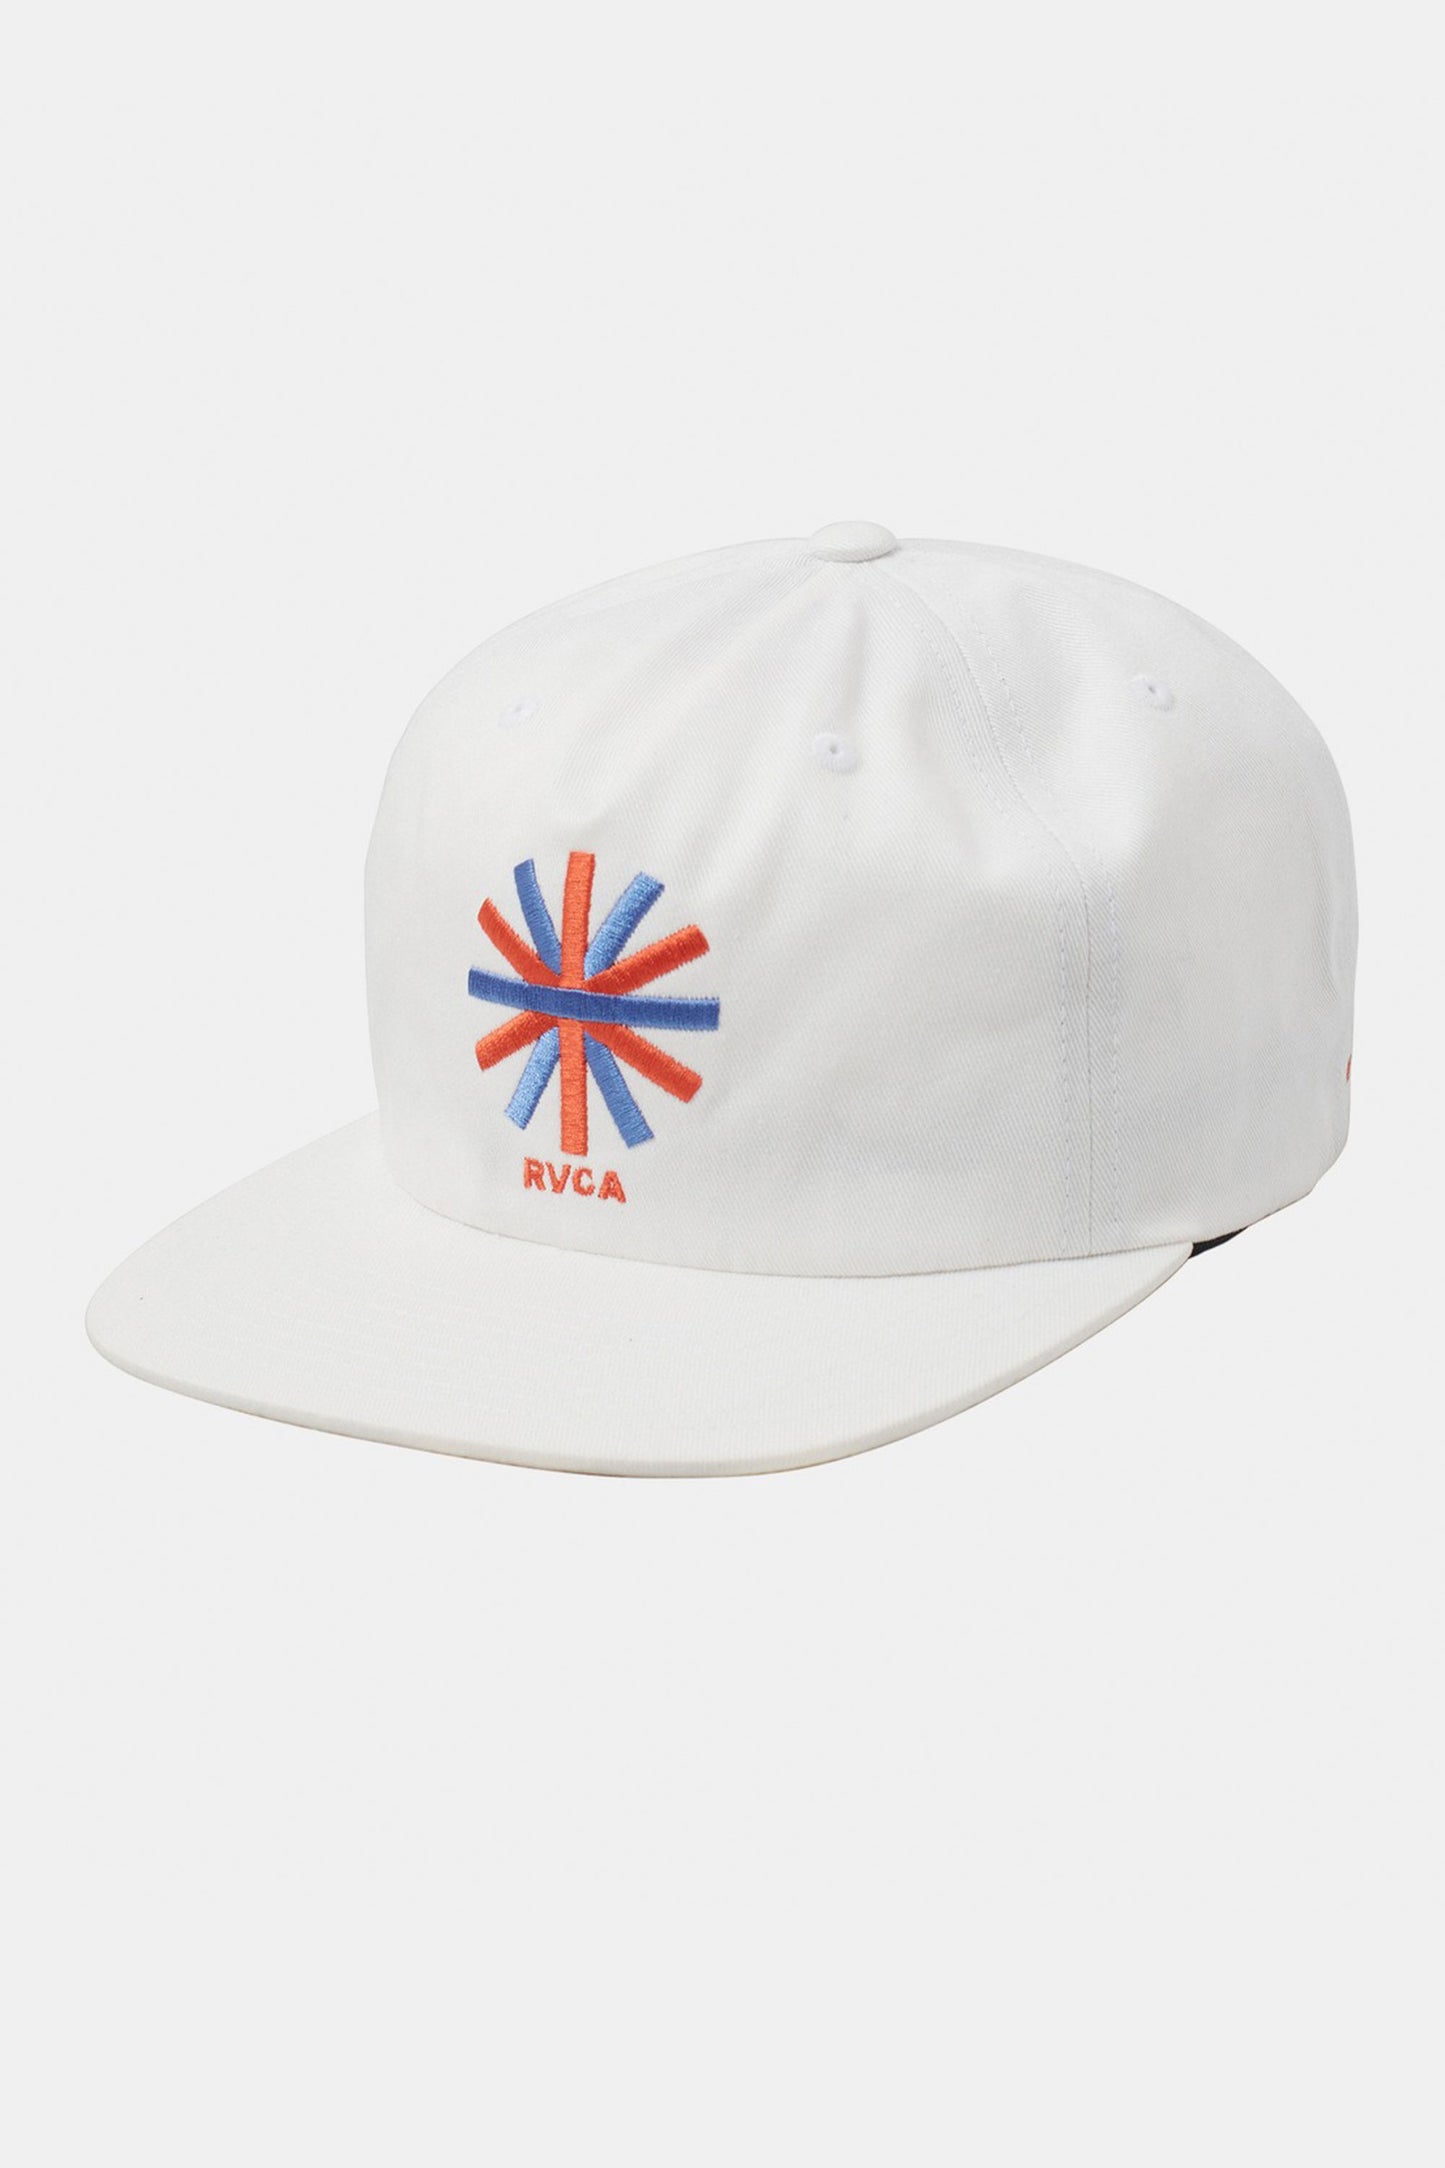    Pukas-Surf-Shop-RVCA-hats-Jesse-Brown-Asterisk-Hat